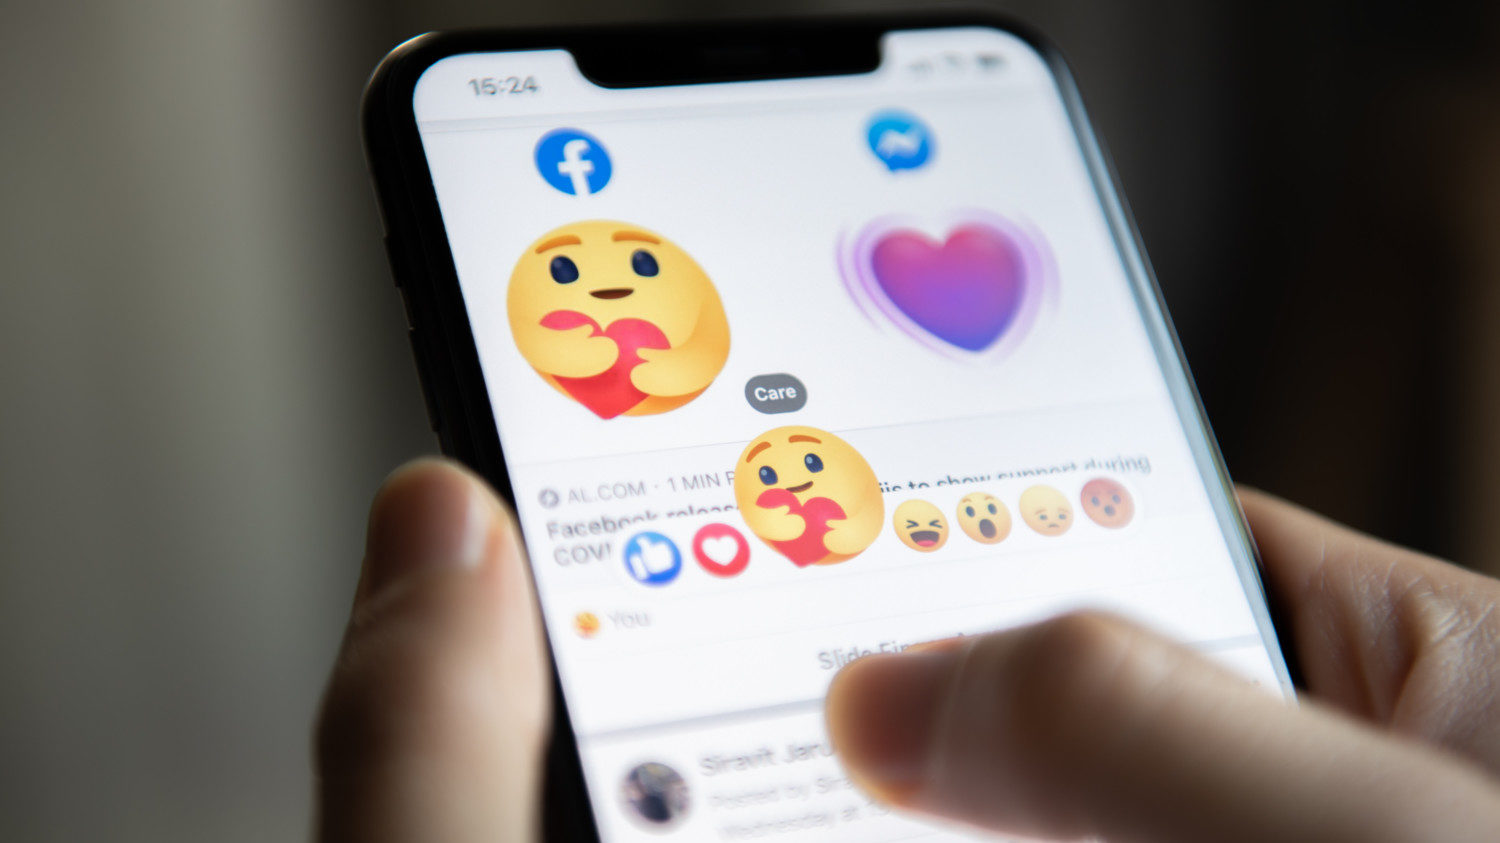 Emojis appear on smartphone screen on Facebook